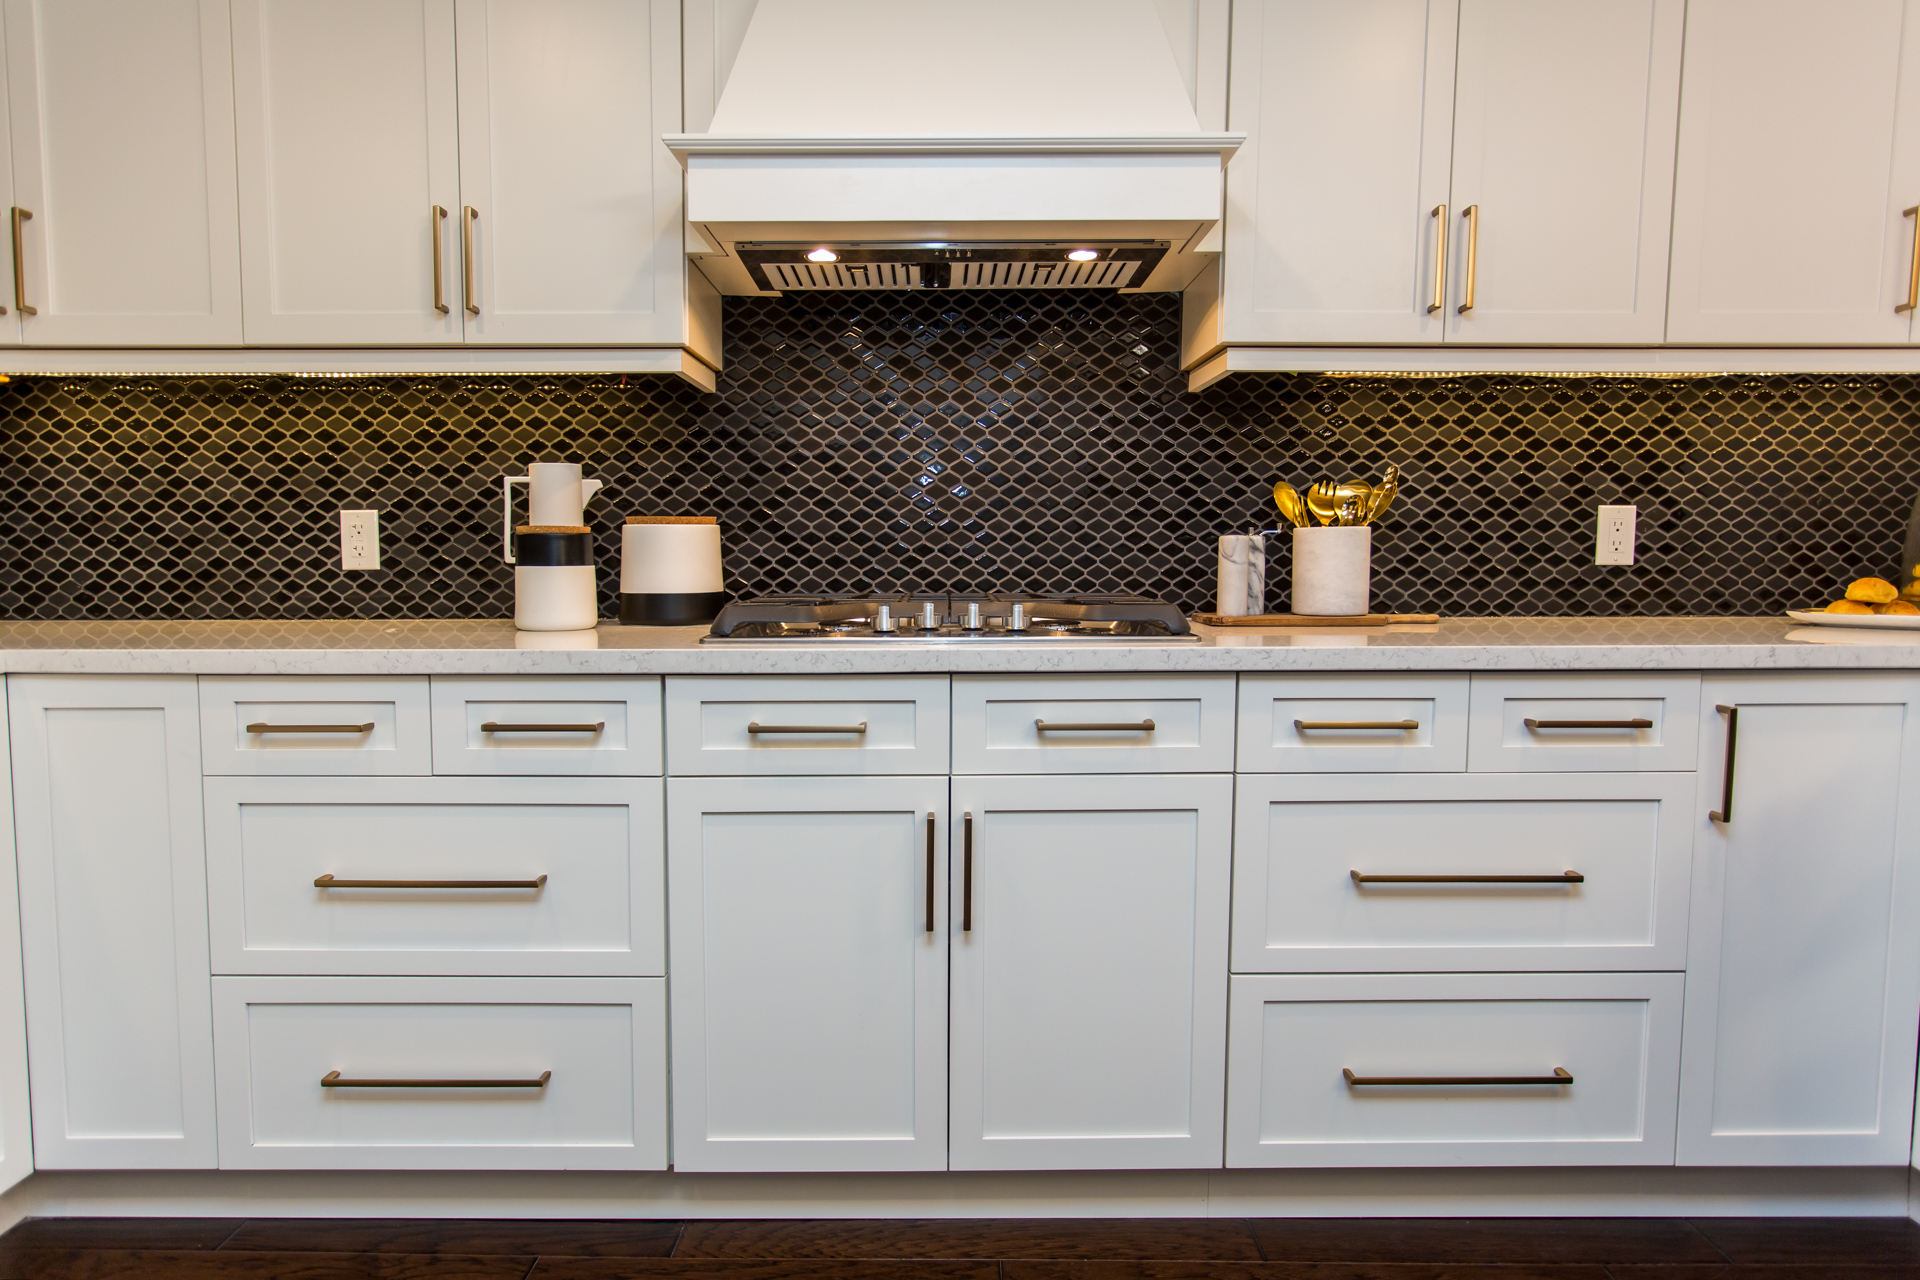 Basement kitchen with black diamond tile backsplash